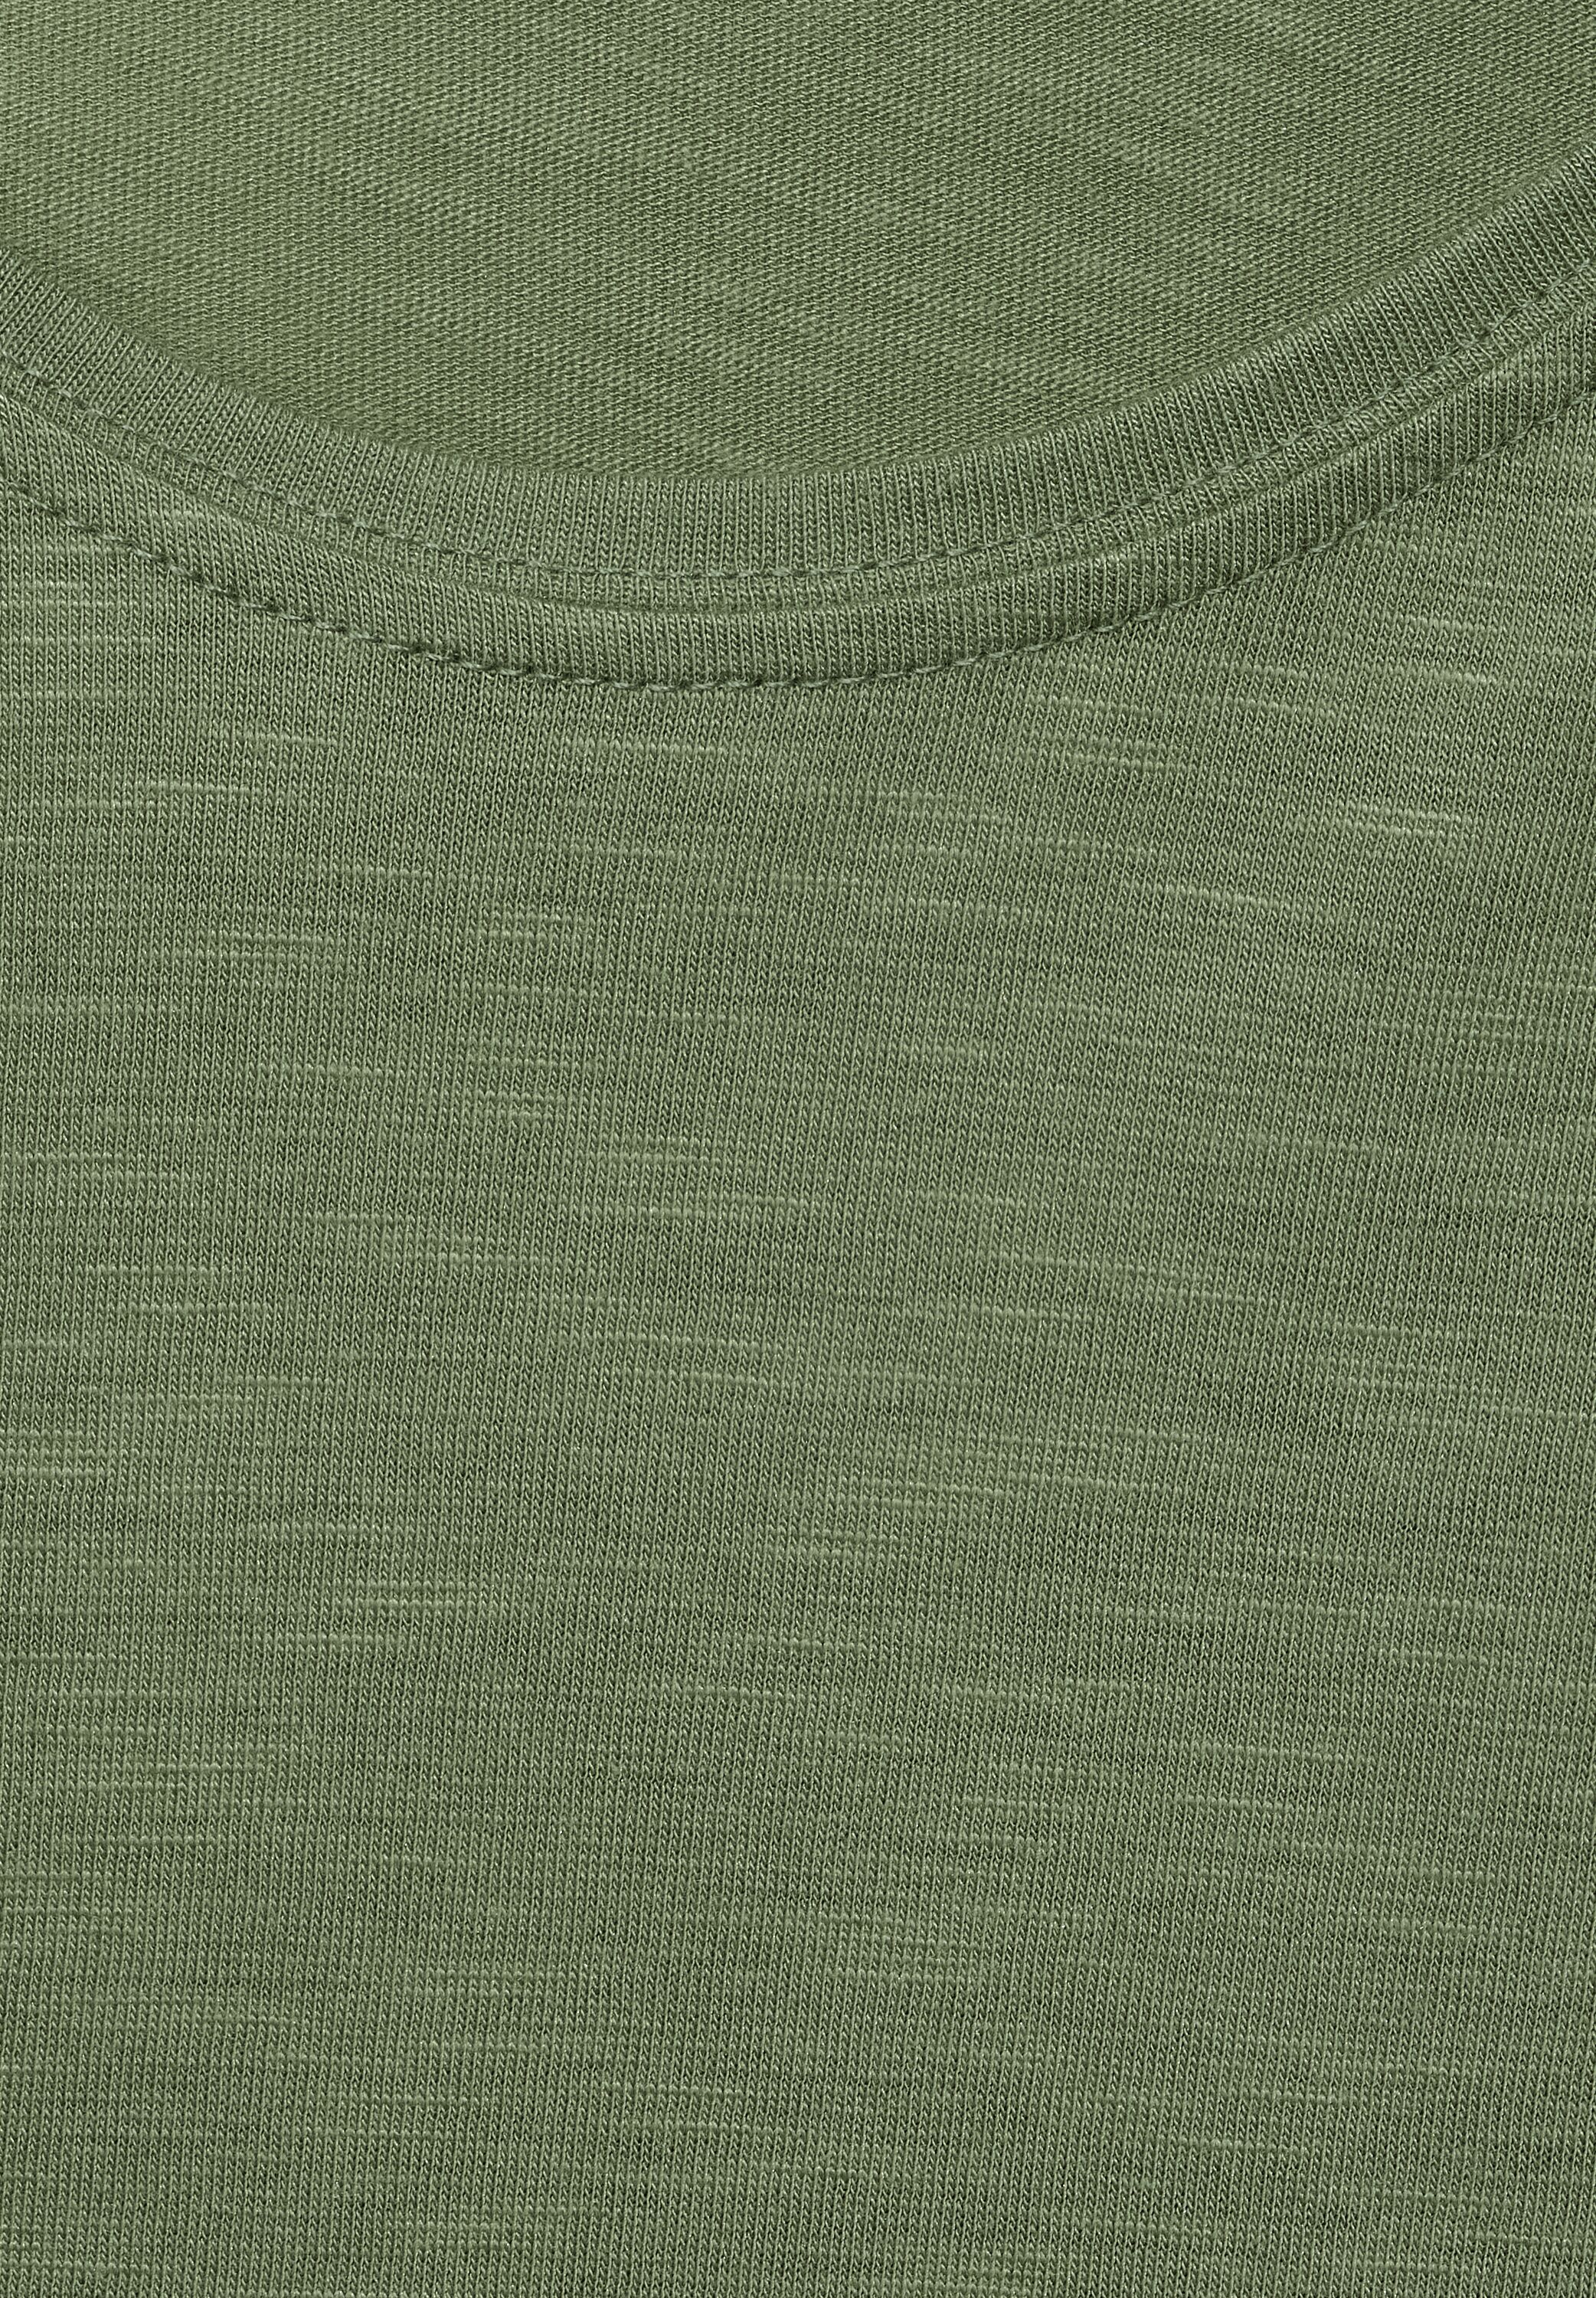 Street One T-Shirt New Gerda in Fern Green im SALE reduziert A317569-13348  - CONCEPT Mode